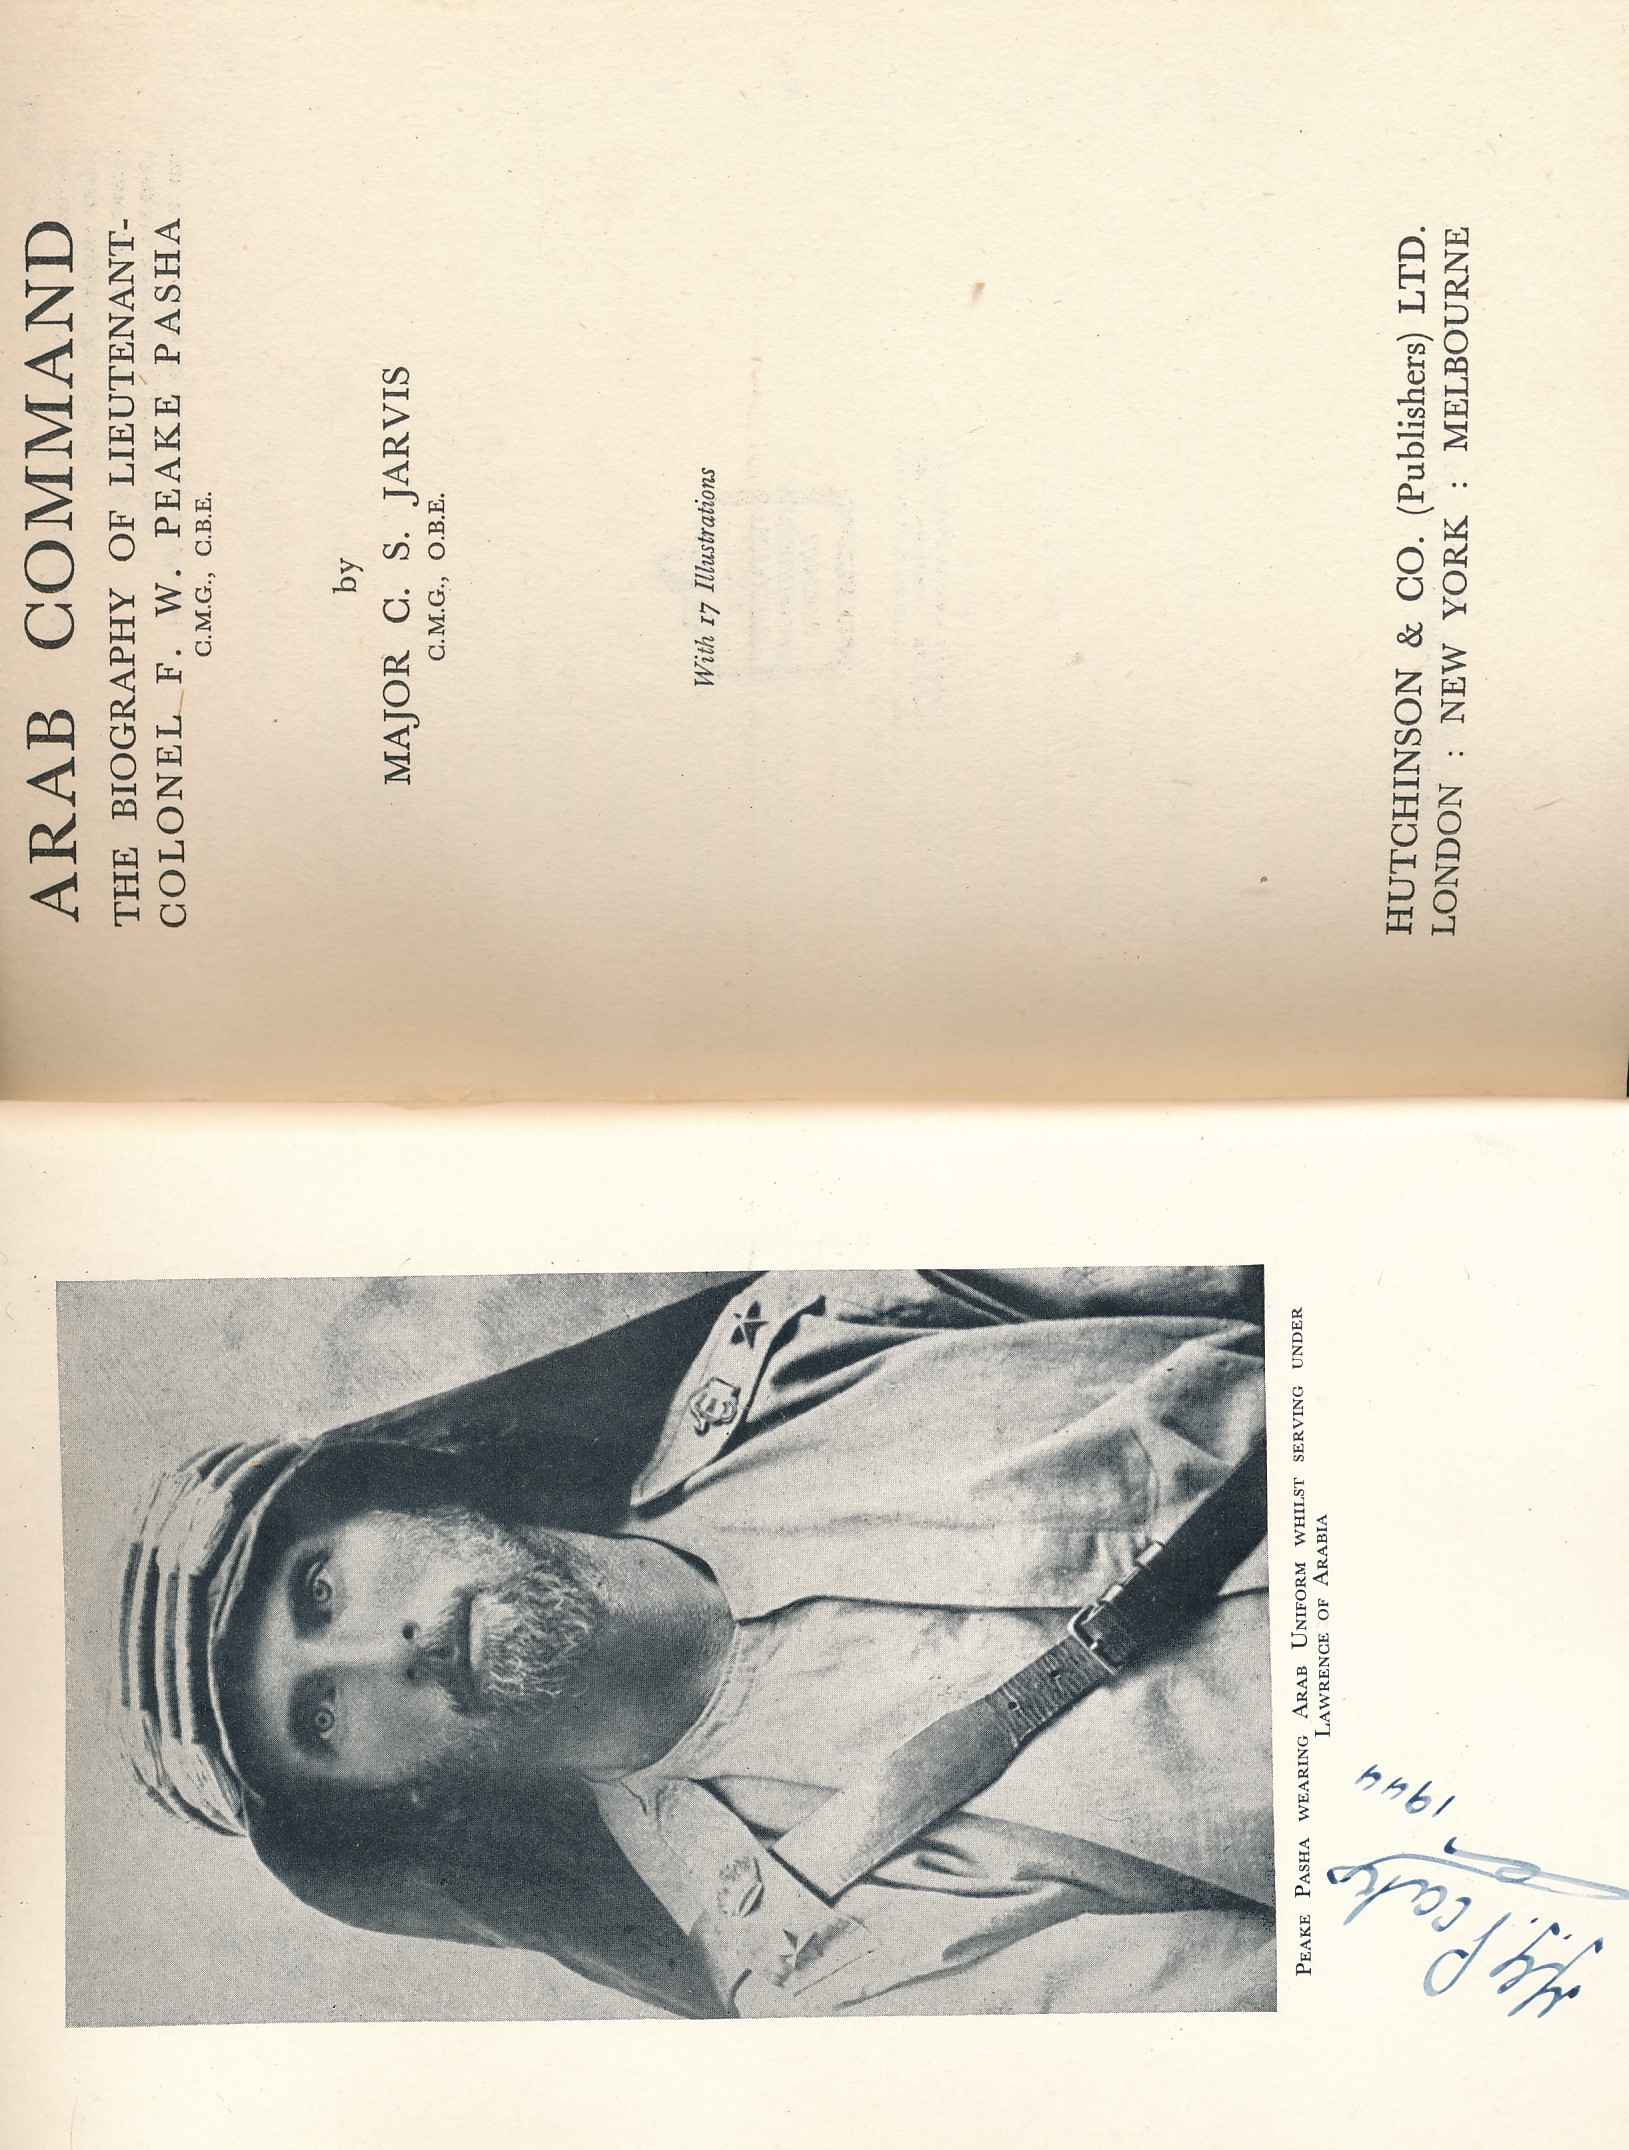 Arab Command. The Biography of Lieutenant-Colonel F.W. Peake Pasha C.M.G., C.B.E. Signed by Peake Pasha